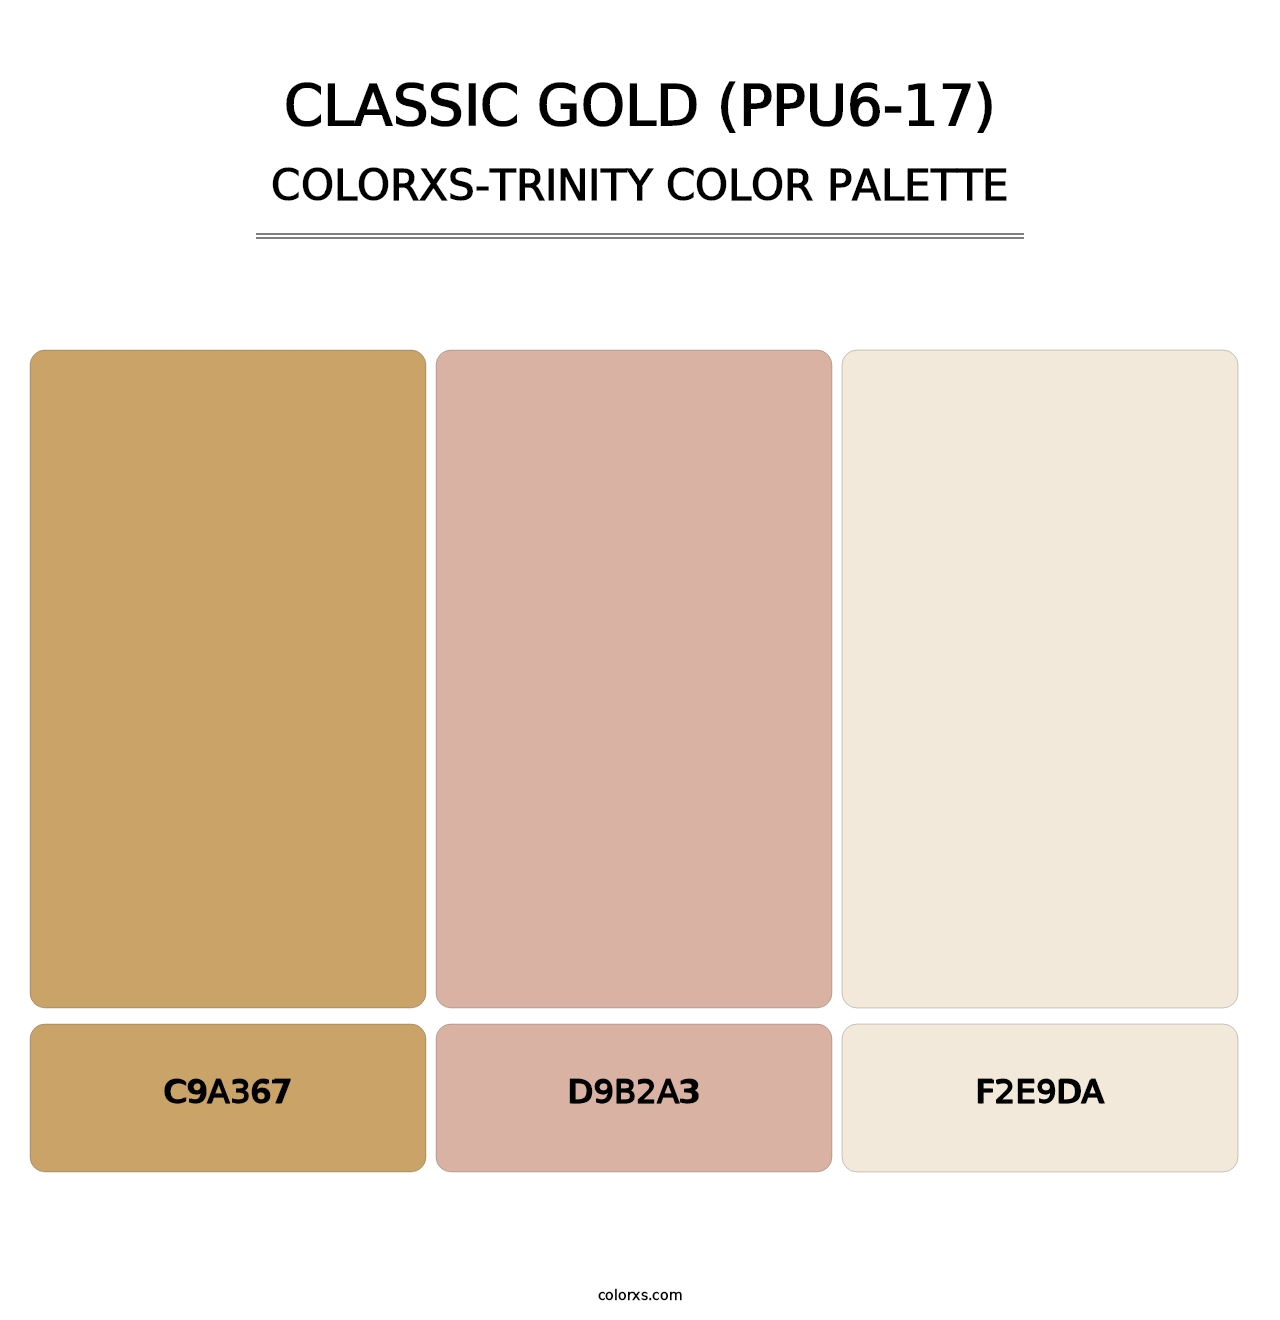 Classic Gold (PPU6-17) - Colorxs Trinity Palette